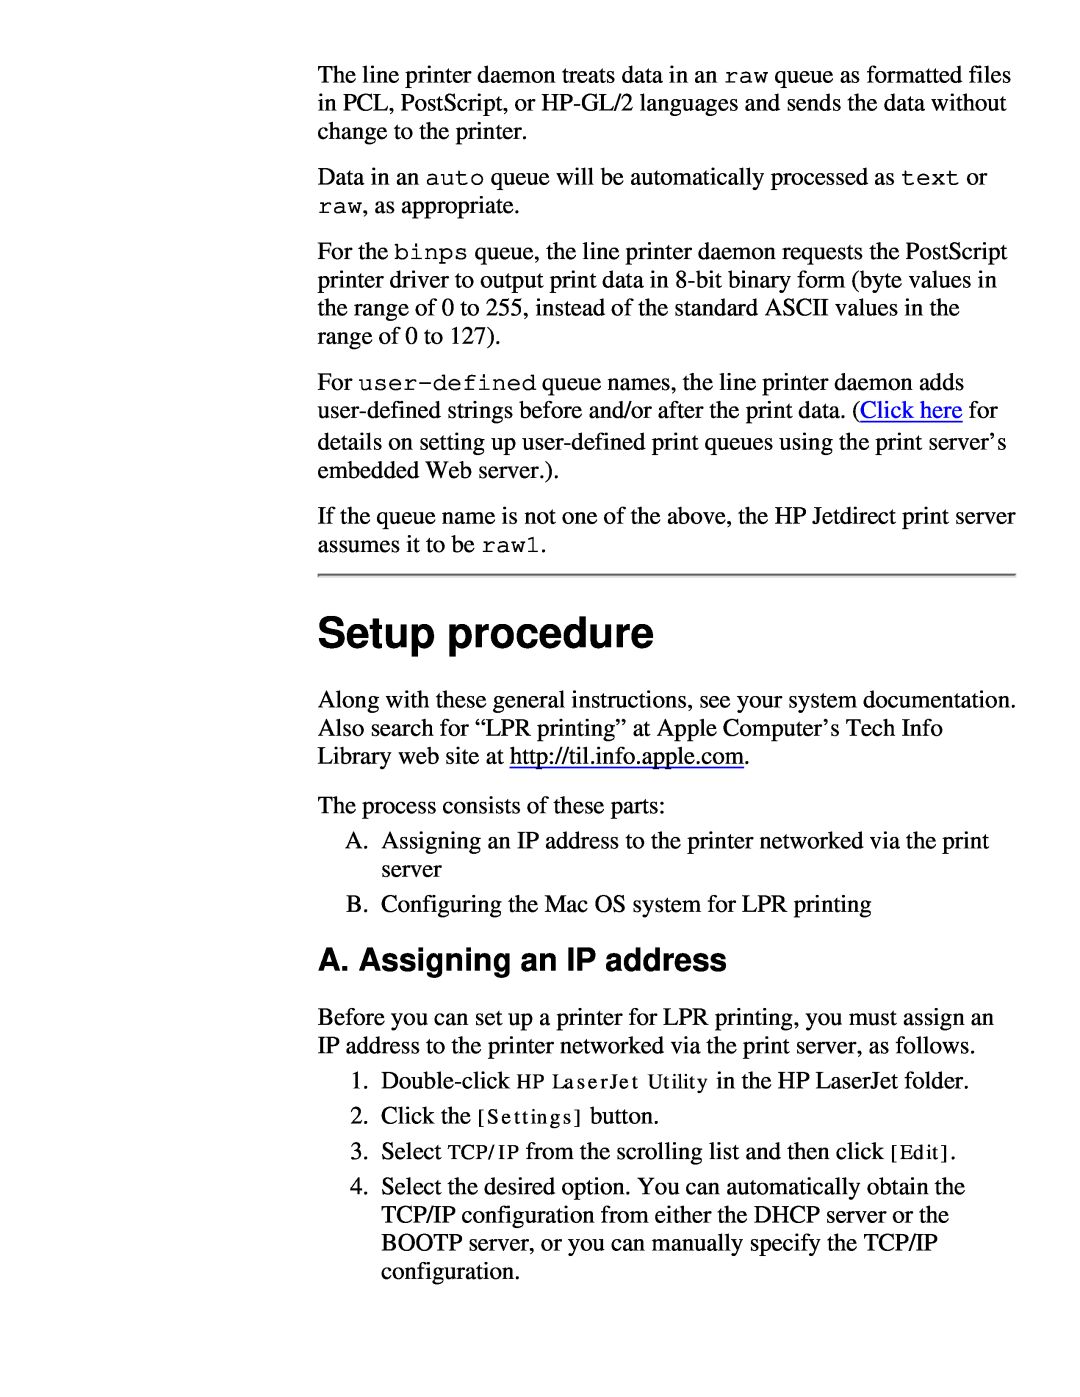 HP 175X, 310X manual Setup procedure, A. Assigning an IP address 